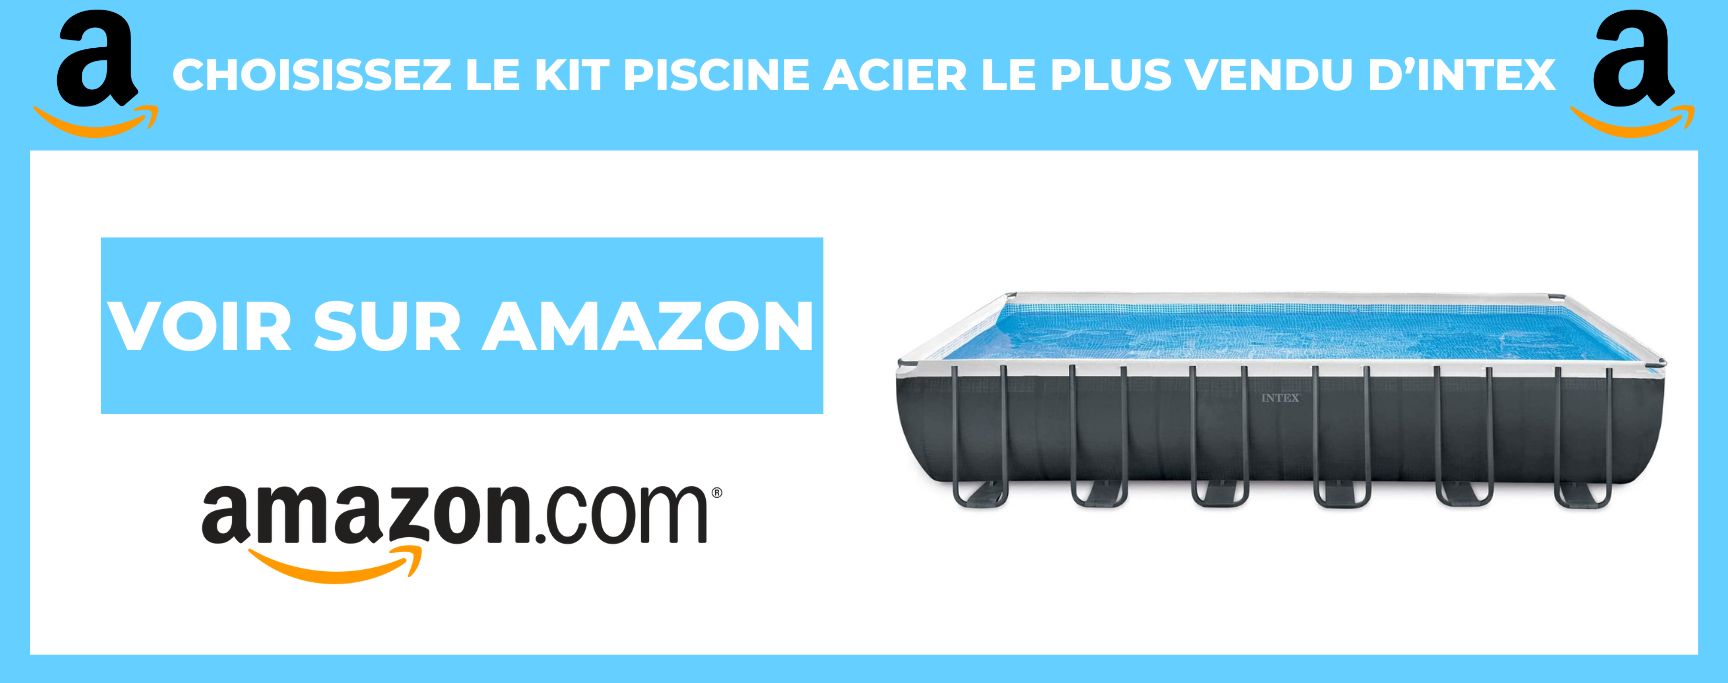 le kit piscine acier best-seller d’INTEX